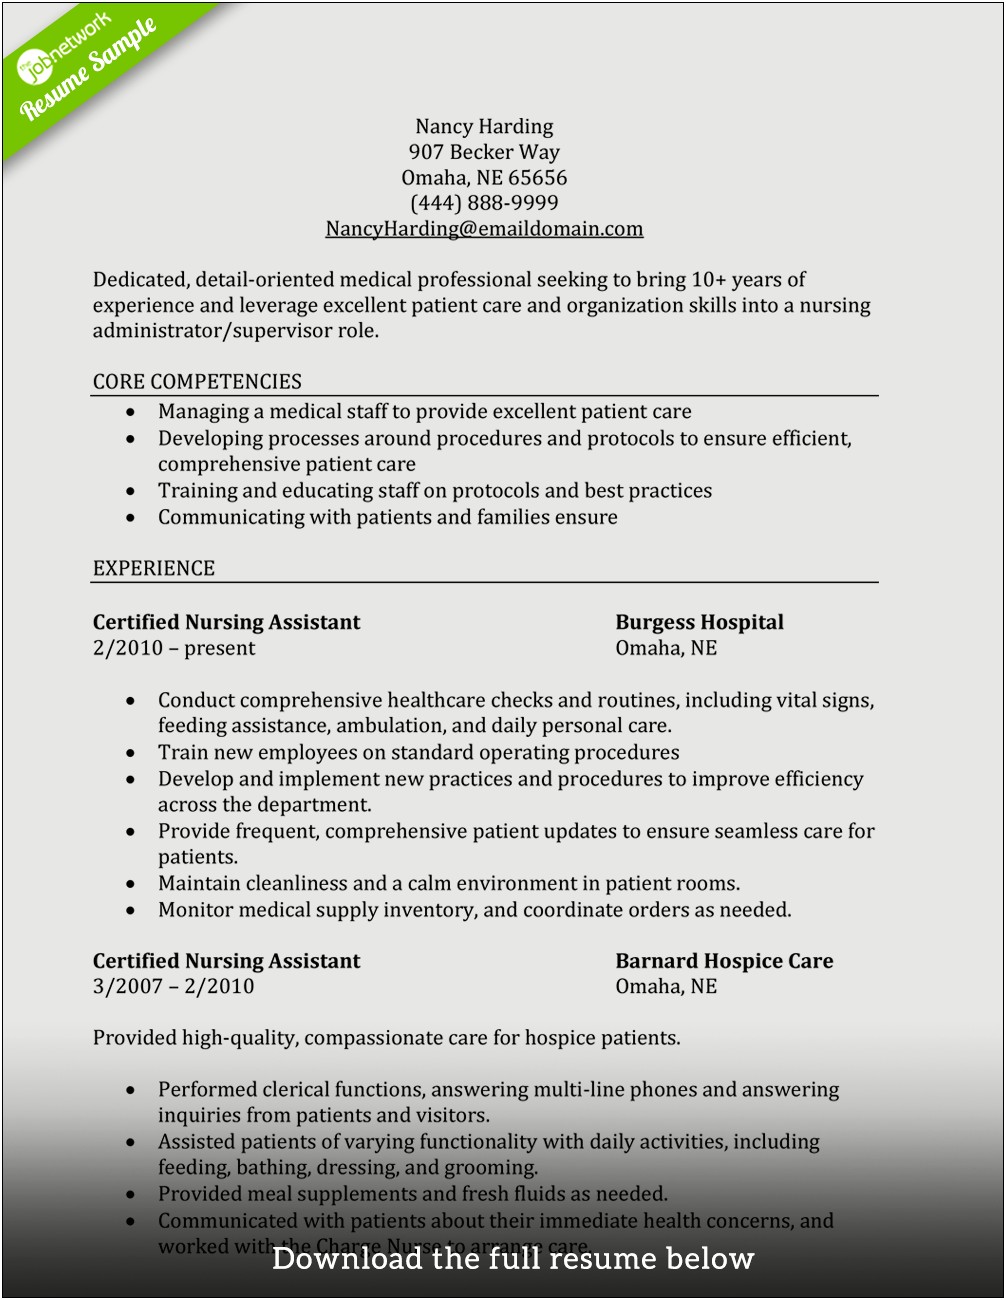 Resume Objective Statement For Hospice Nurse